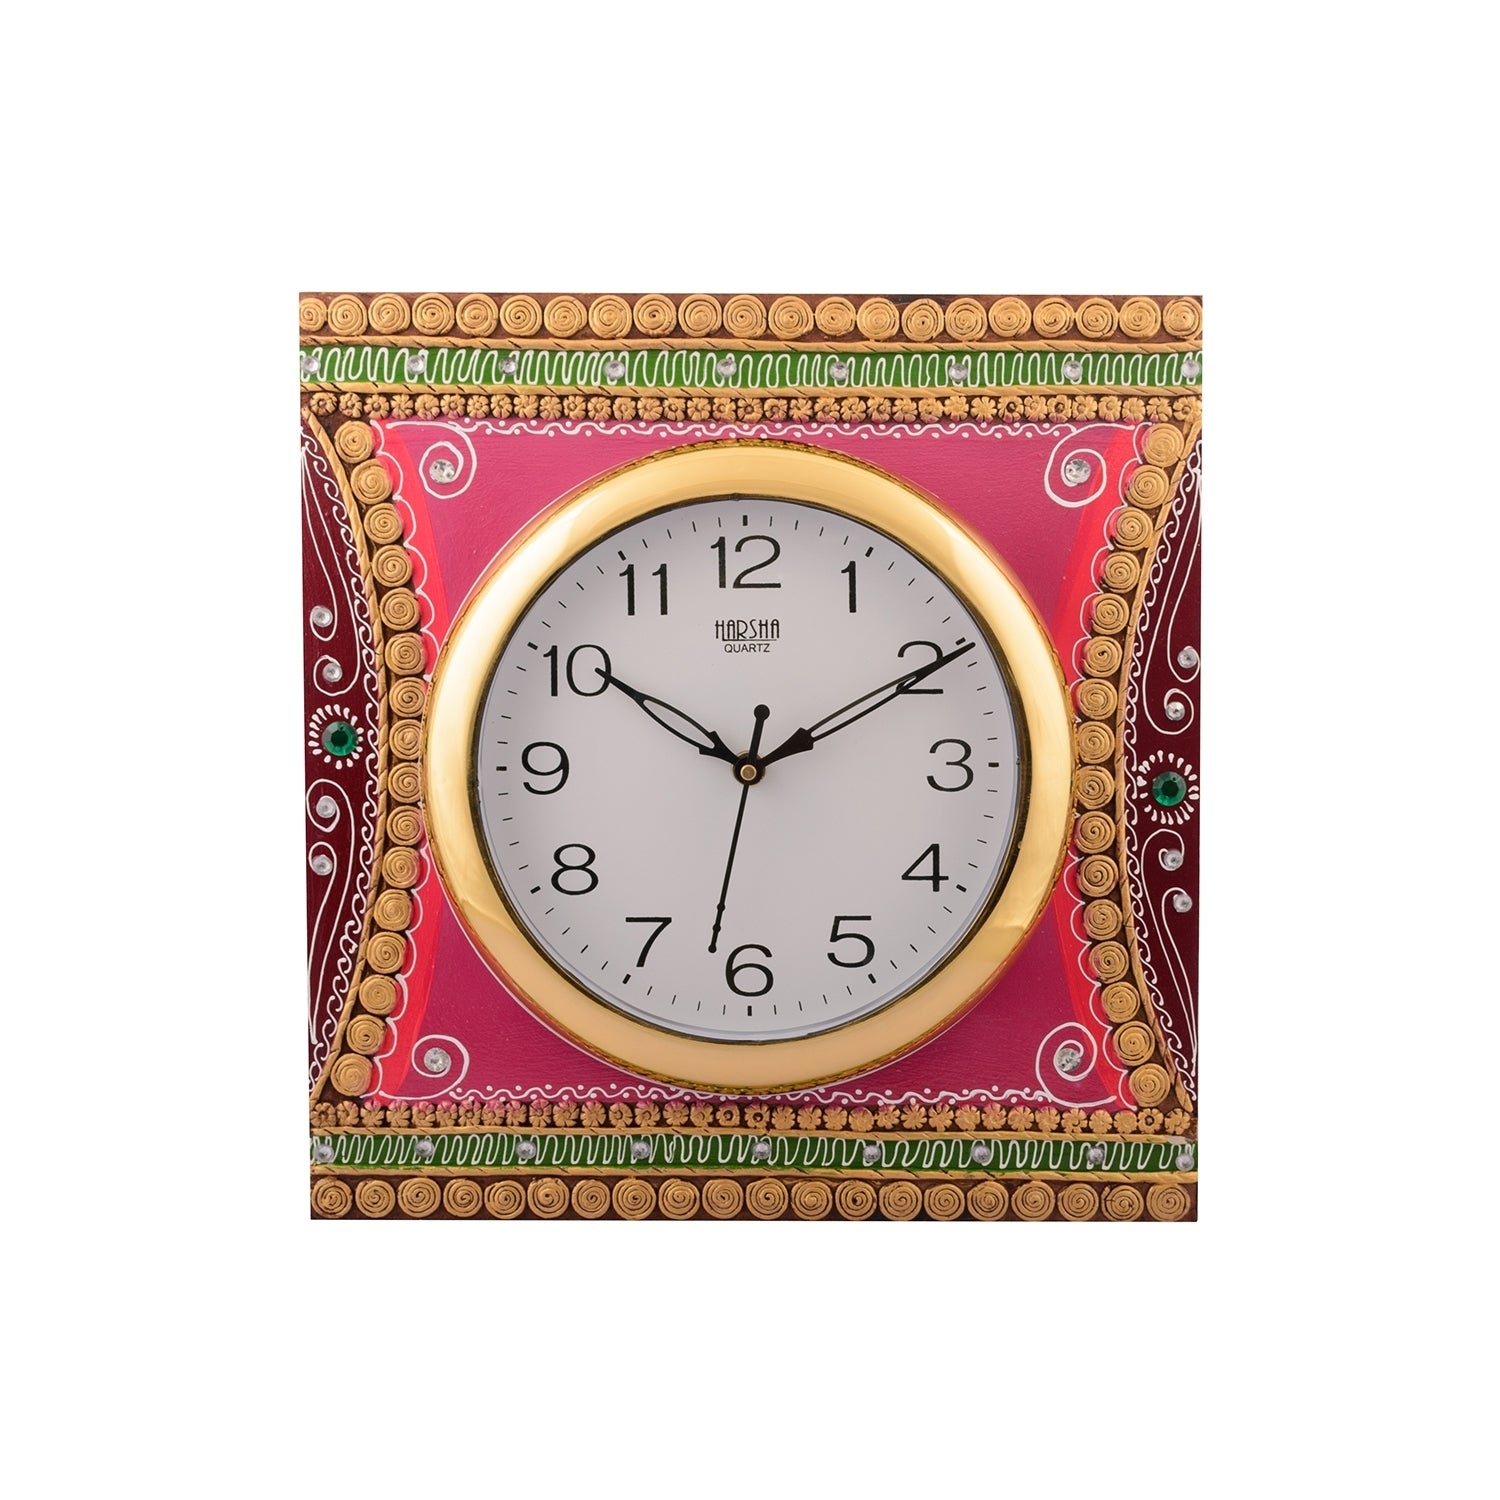 Wooden Papier Mache Decorative Artistic Handcrafted Wall Clock